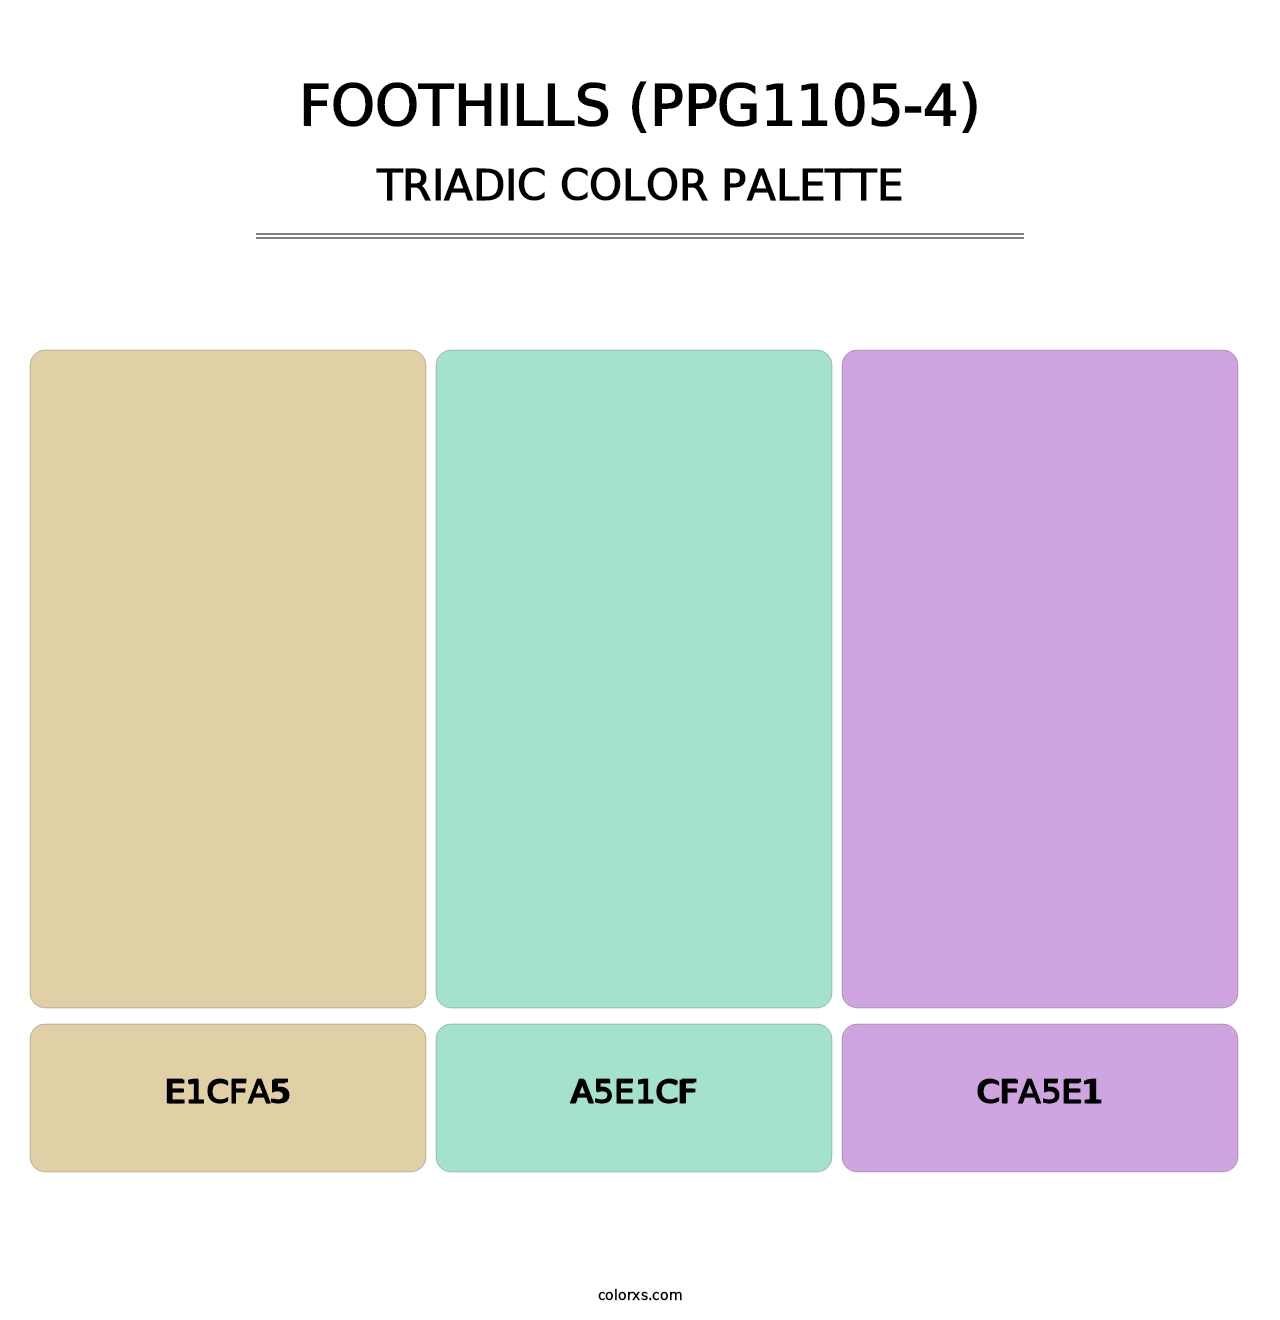 Foothills (PPG1105-4) - Triadic Color Palette